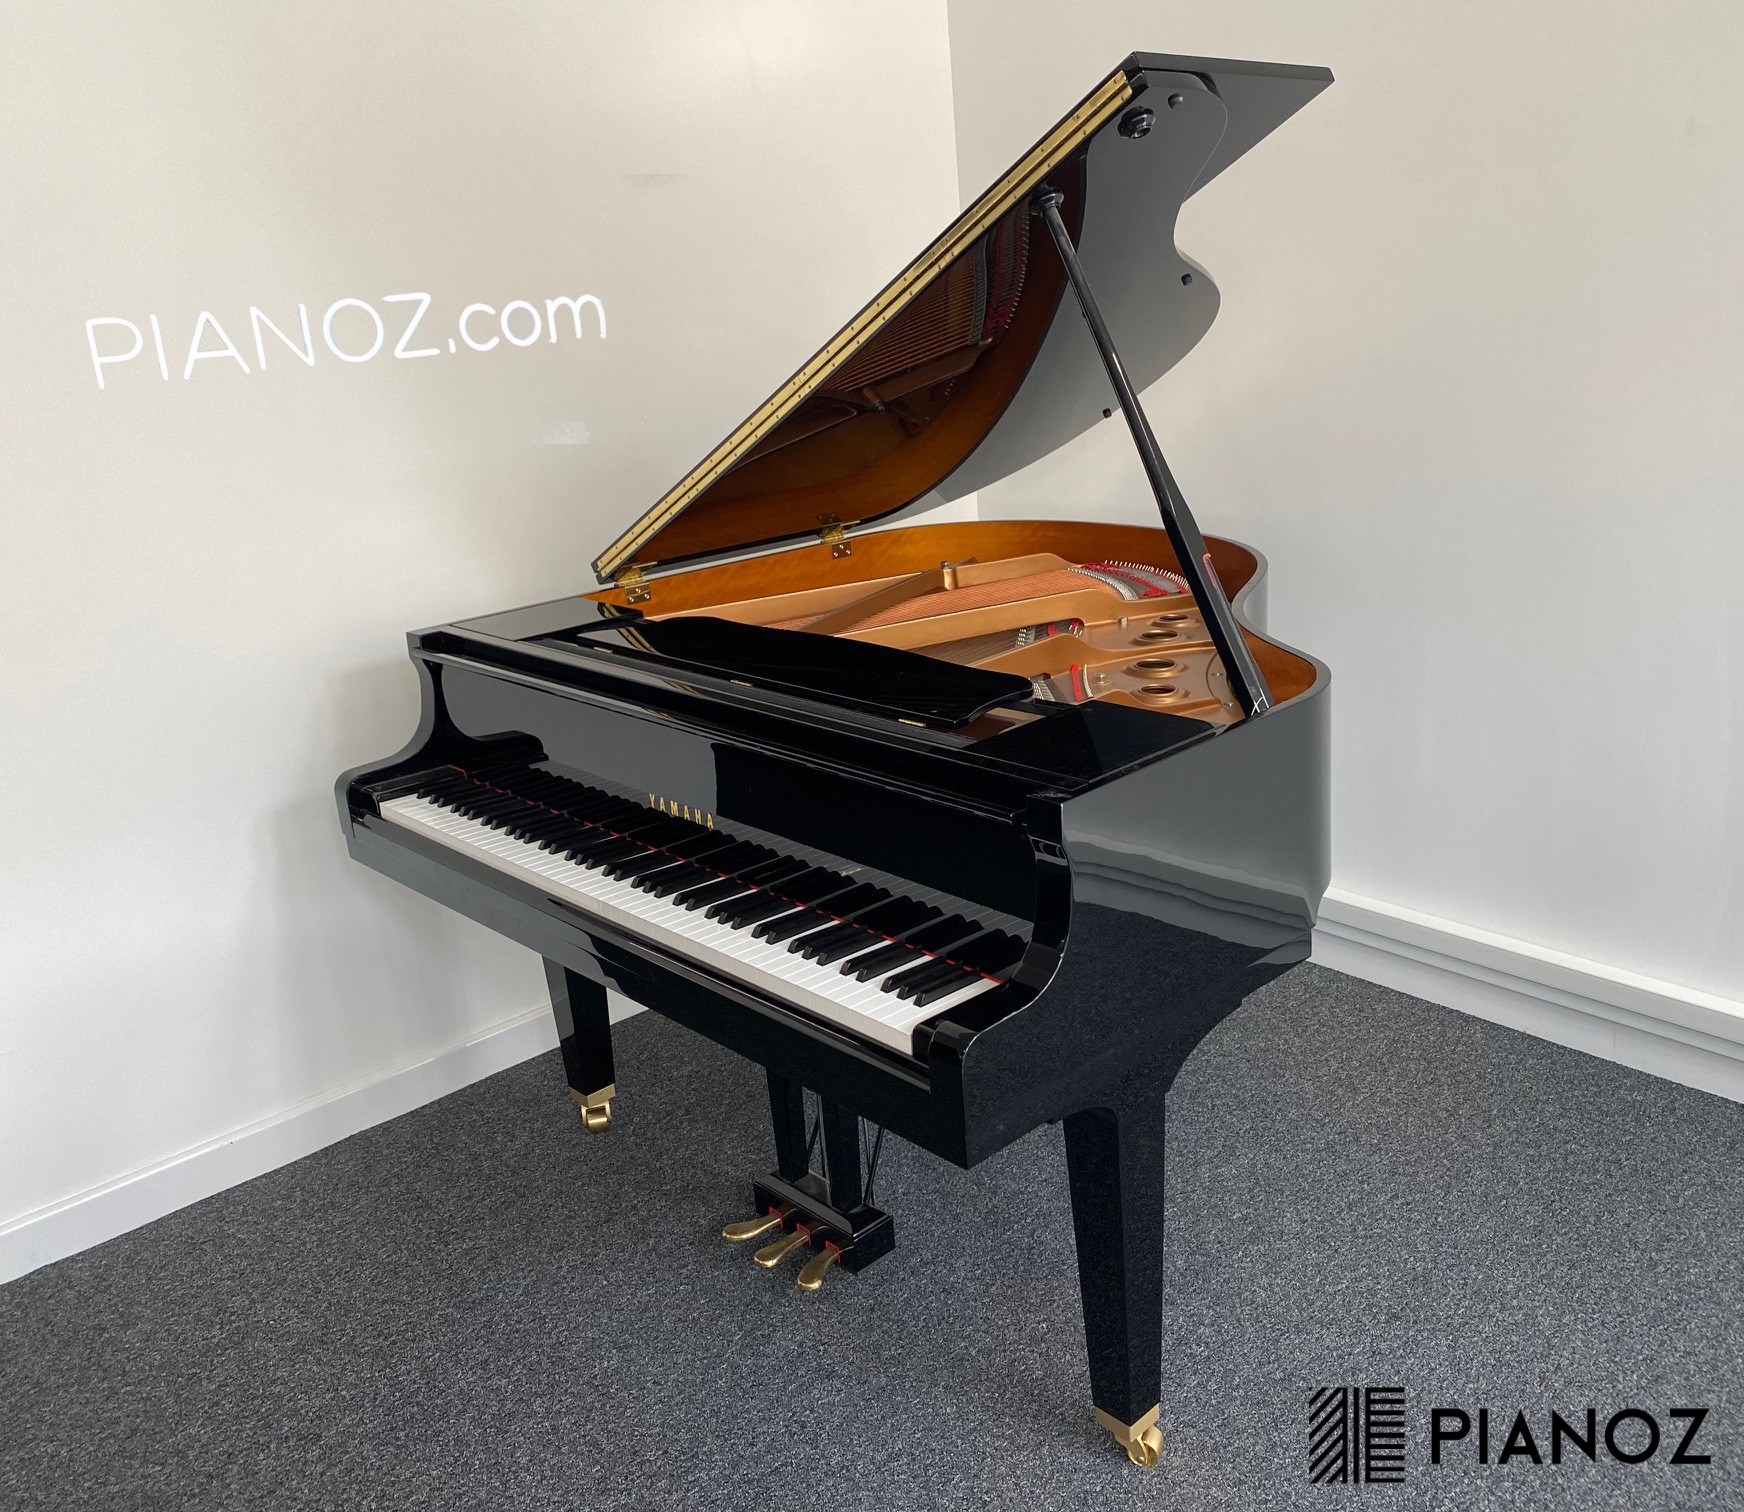 Yamaha GB1 Black Gloss Baby Grand Piano piano for sale in UK